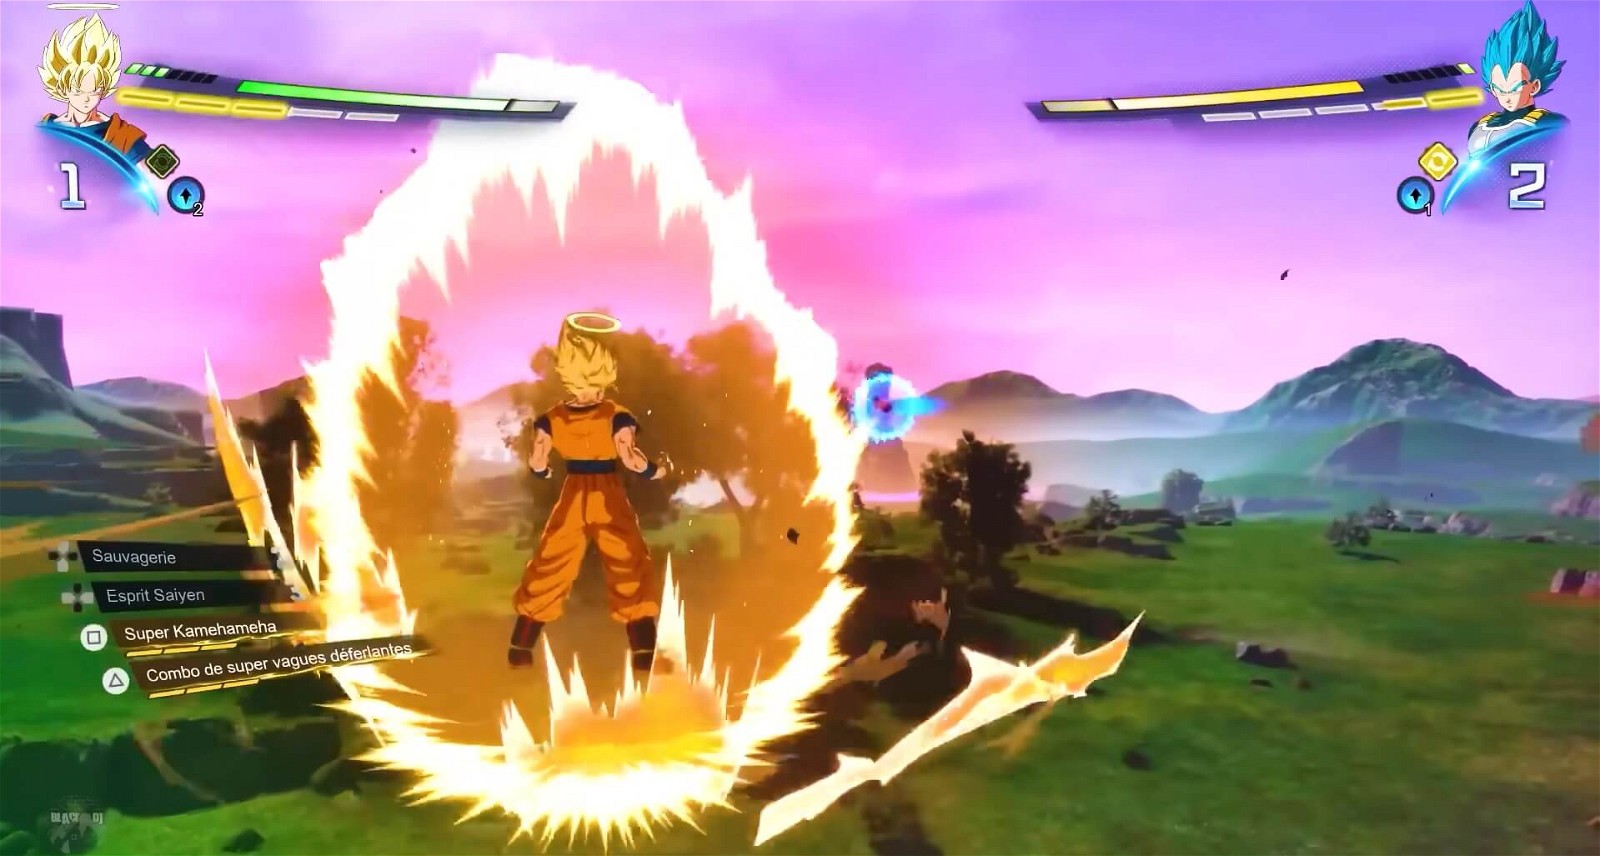 Super Saiyan Blue Vegeta is shifting position while Super Saiyan Goku charges ki. Credits: BLACK DJ